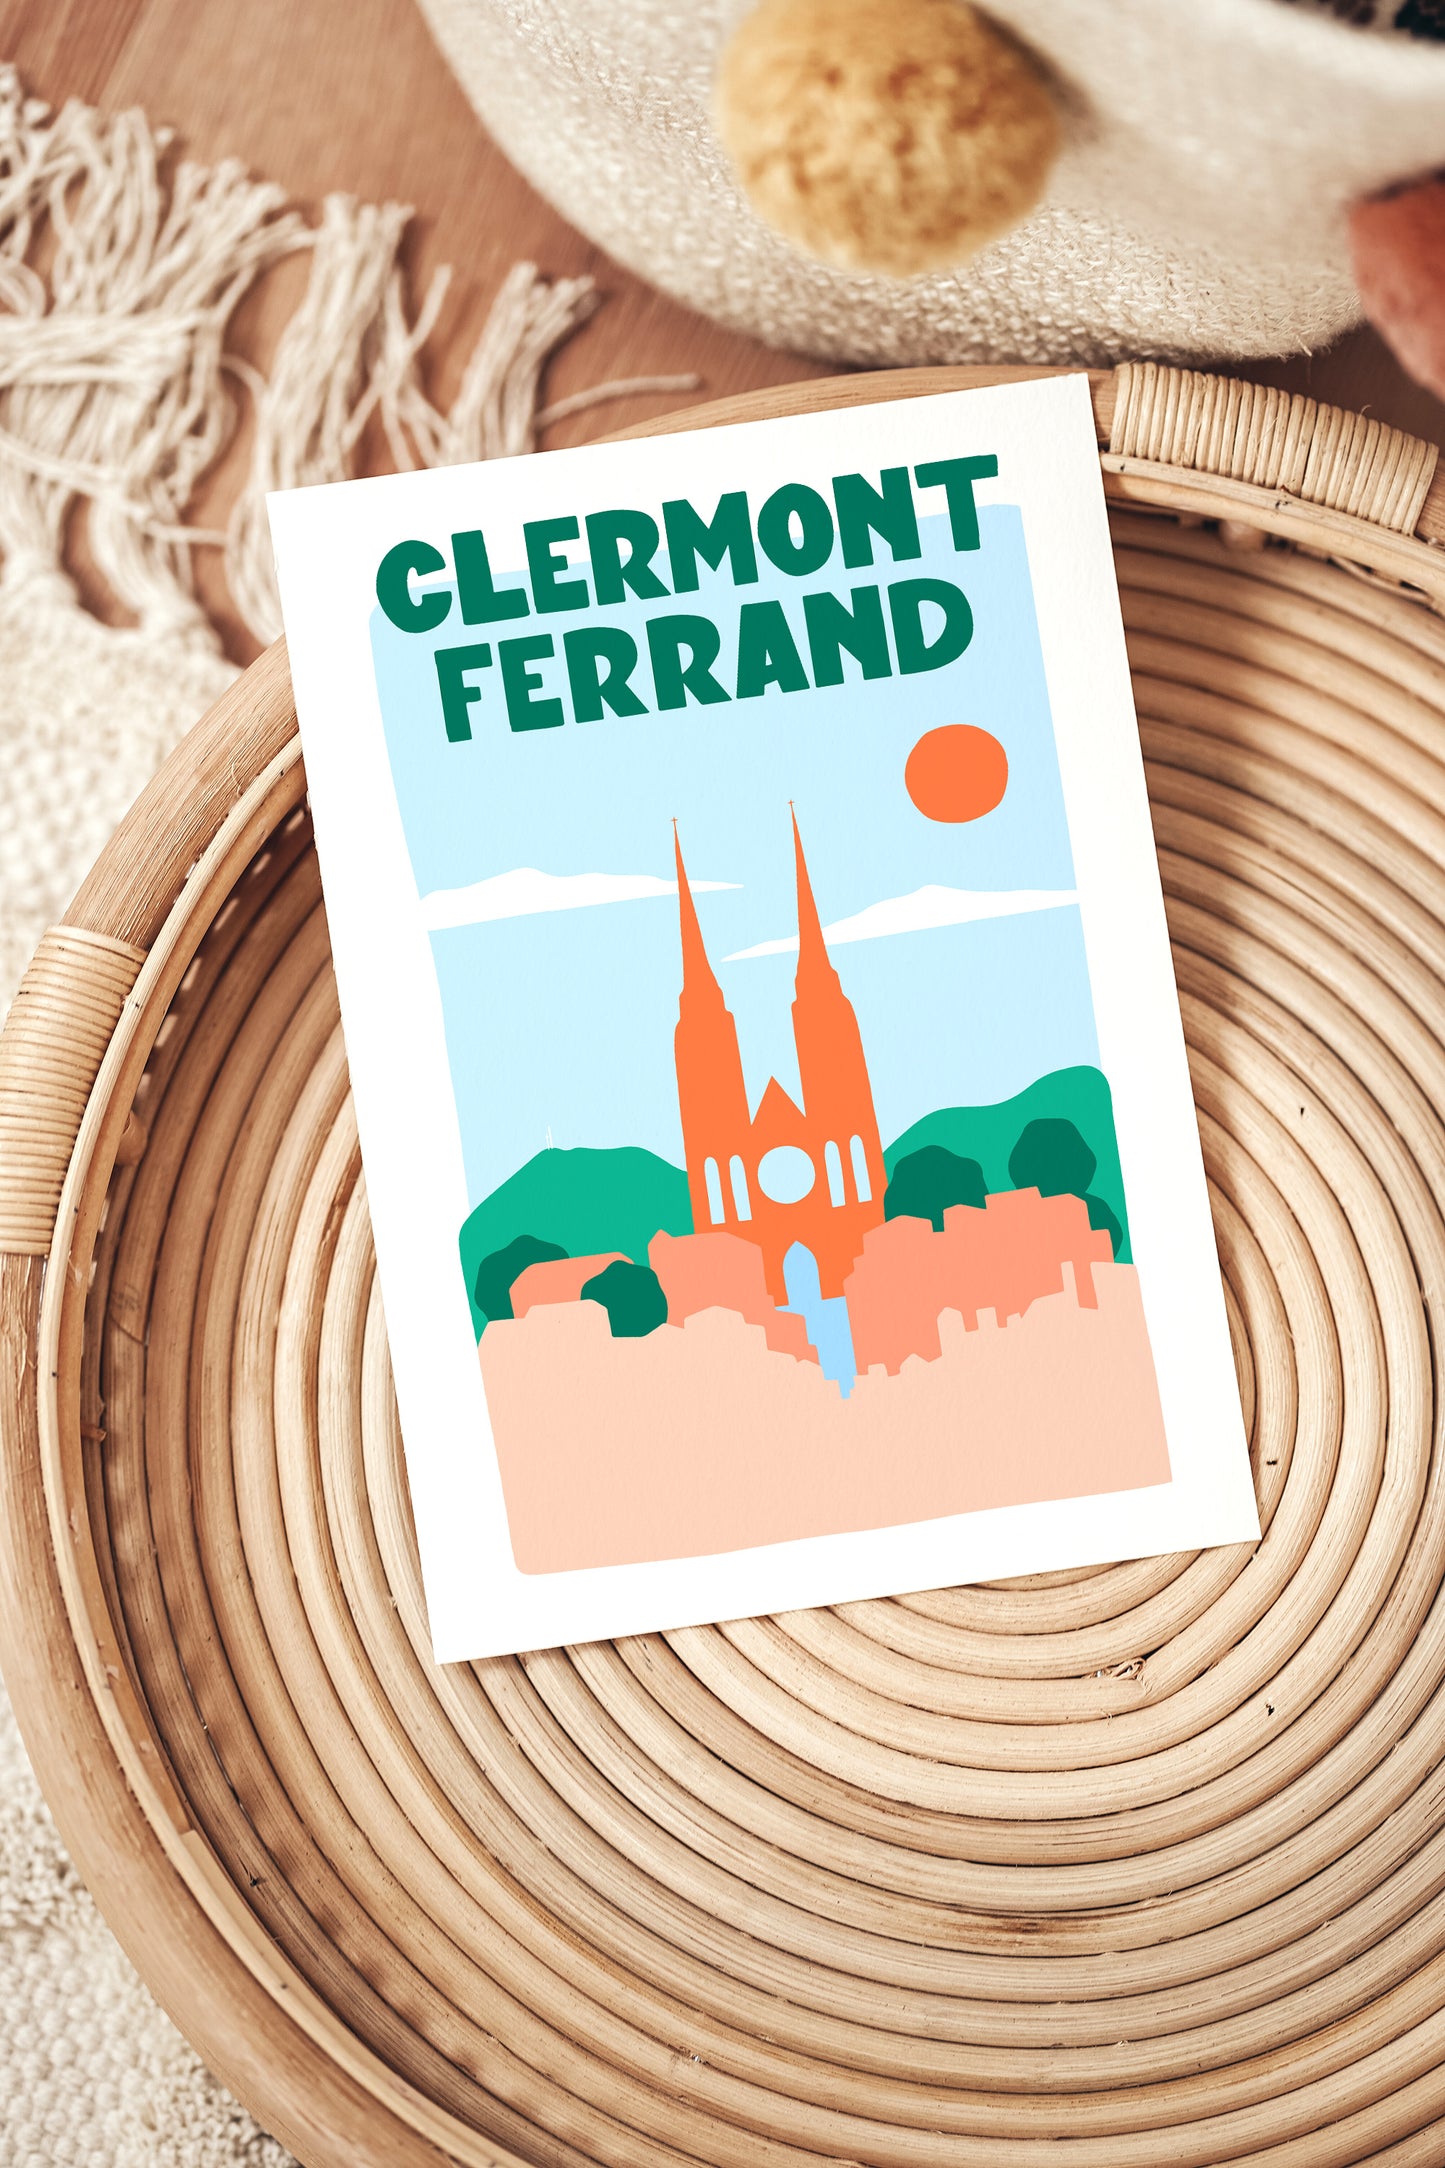 Affiche ville Clermont Ferrand